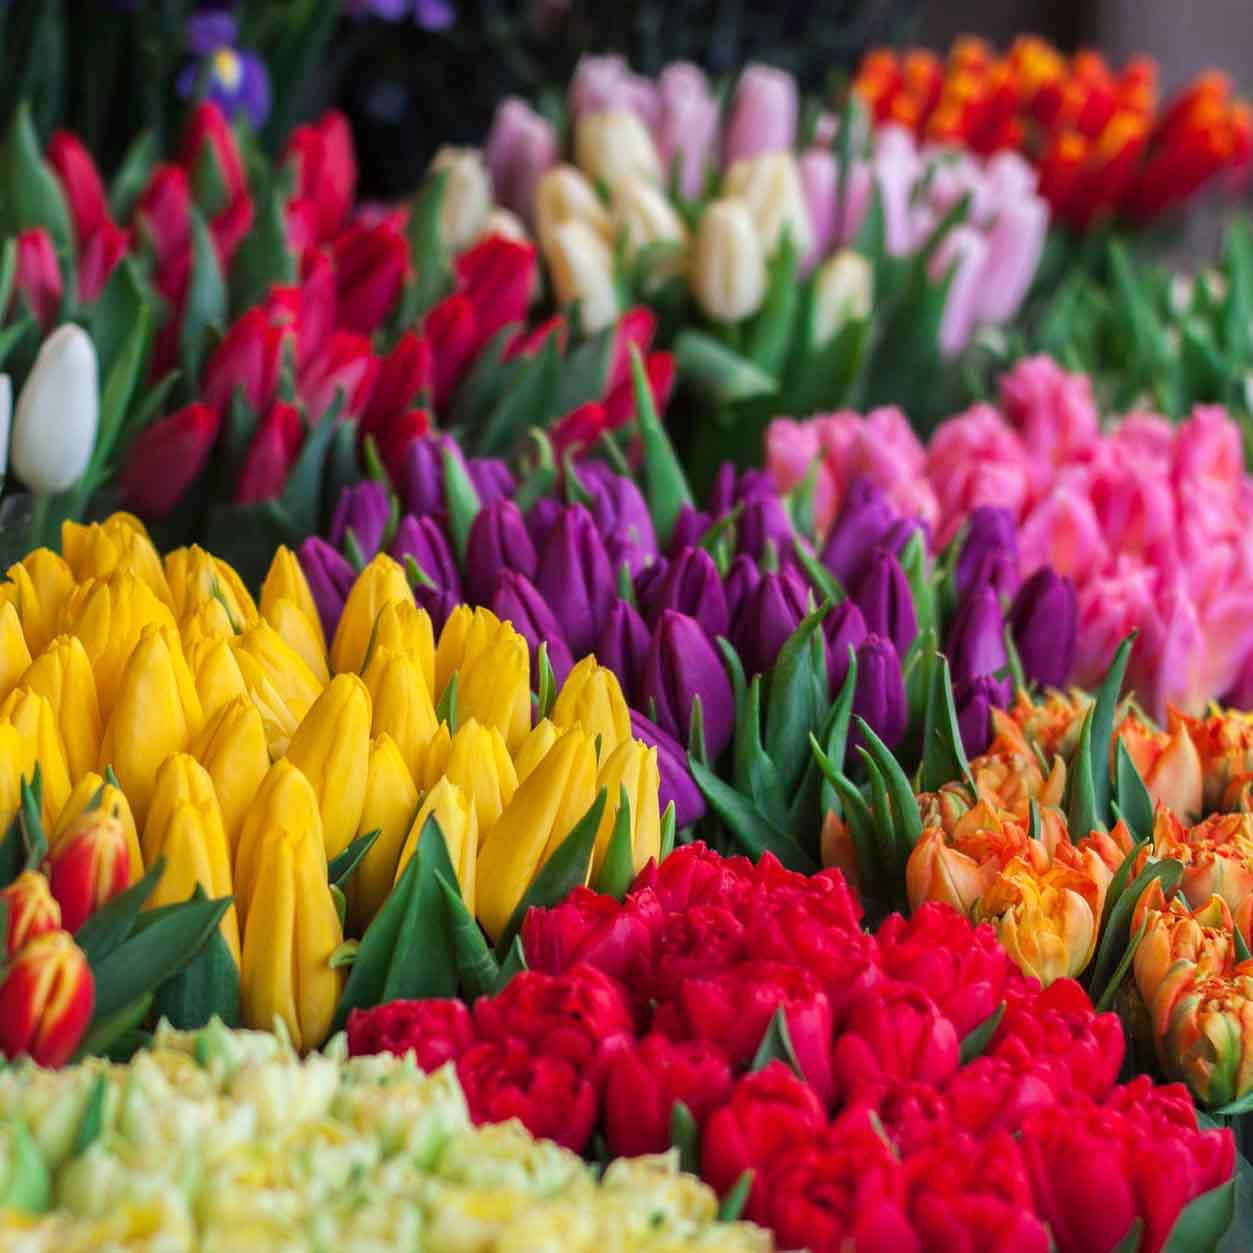 Flower,Petal,Tulip,Plant,Flowering plant,Floristry,Spring,Yellow,Cut flowers,Botany